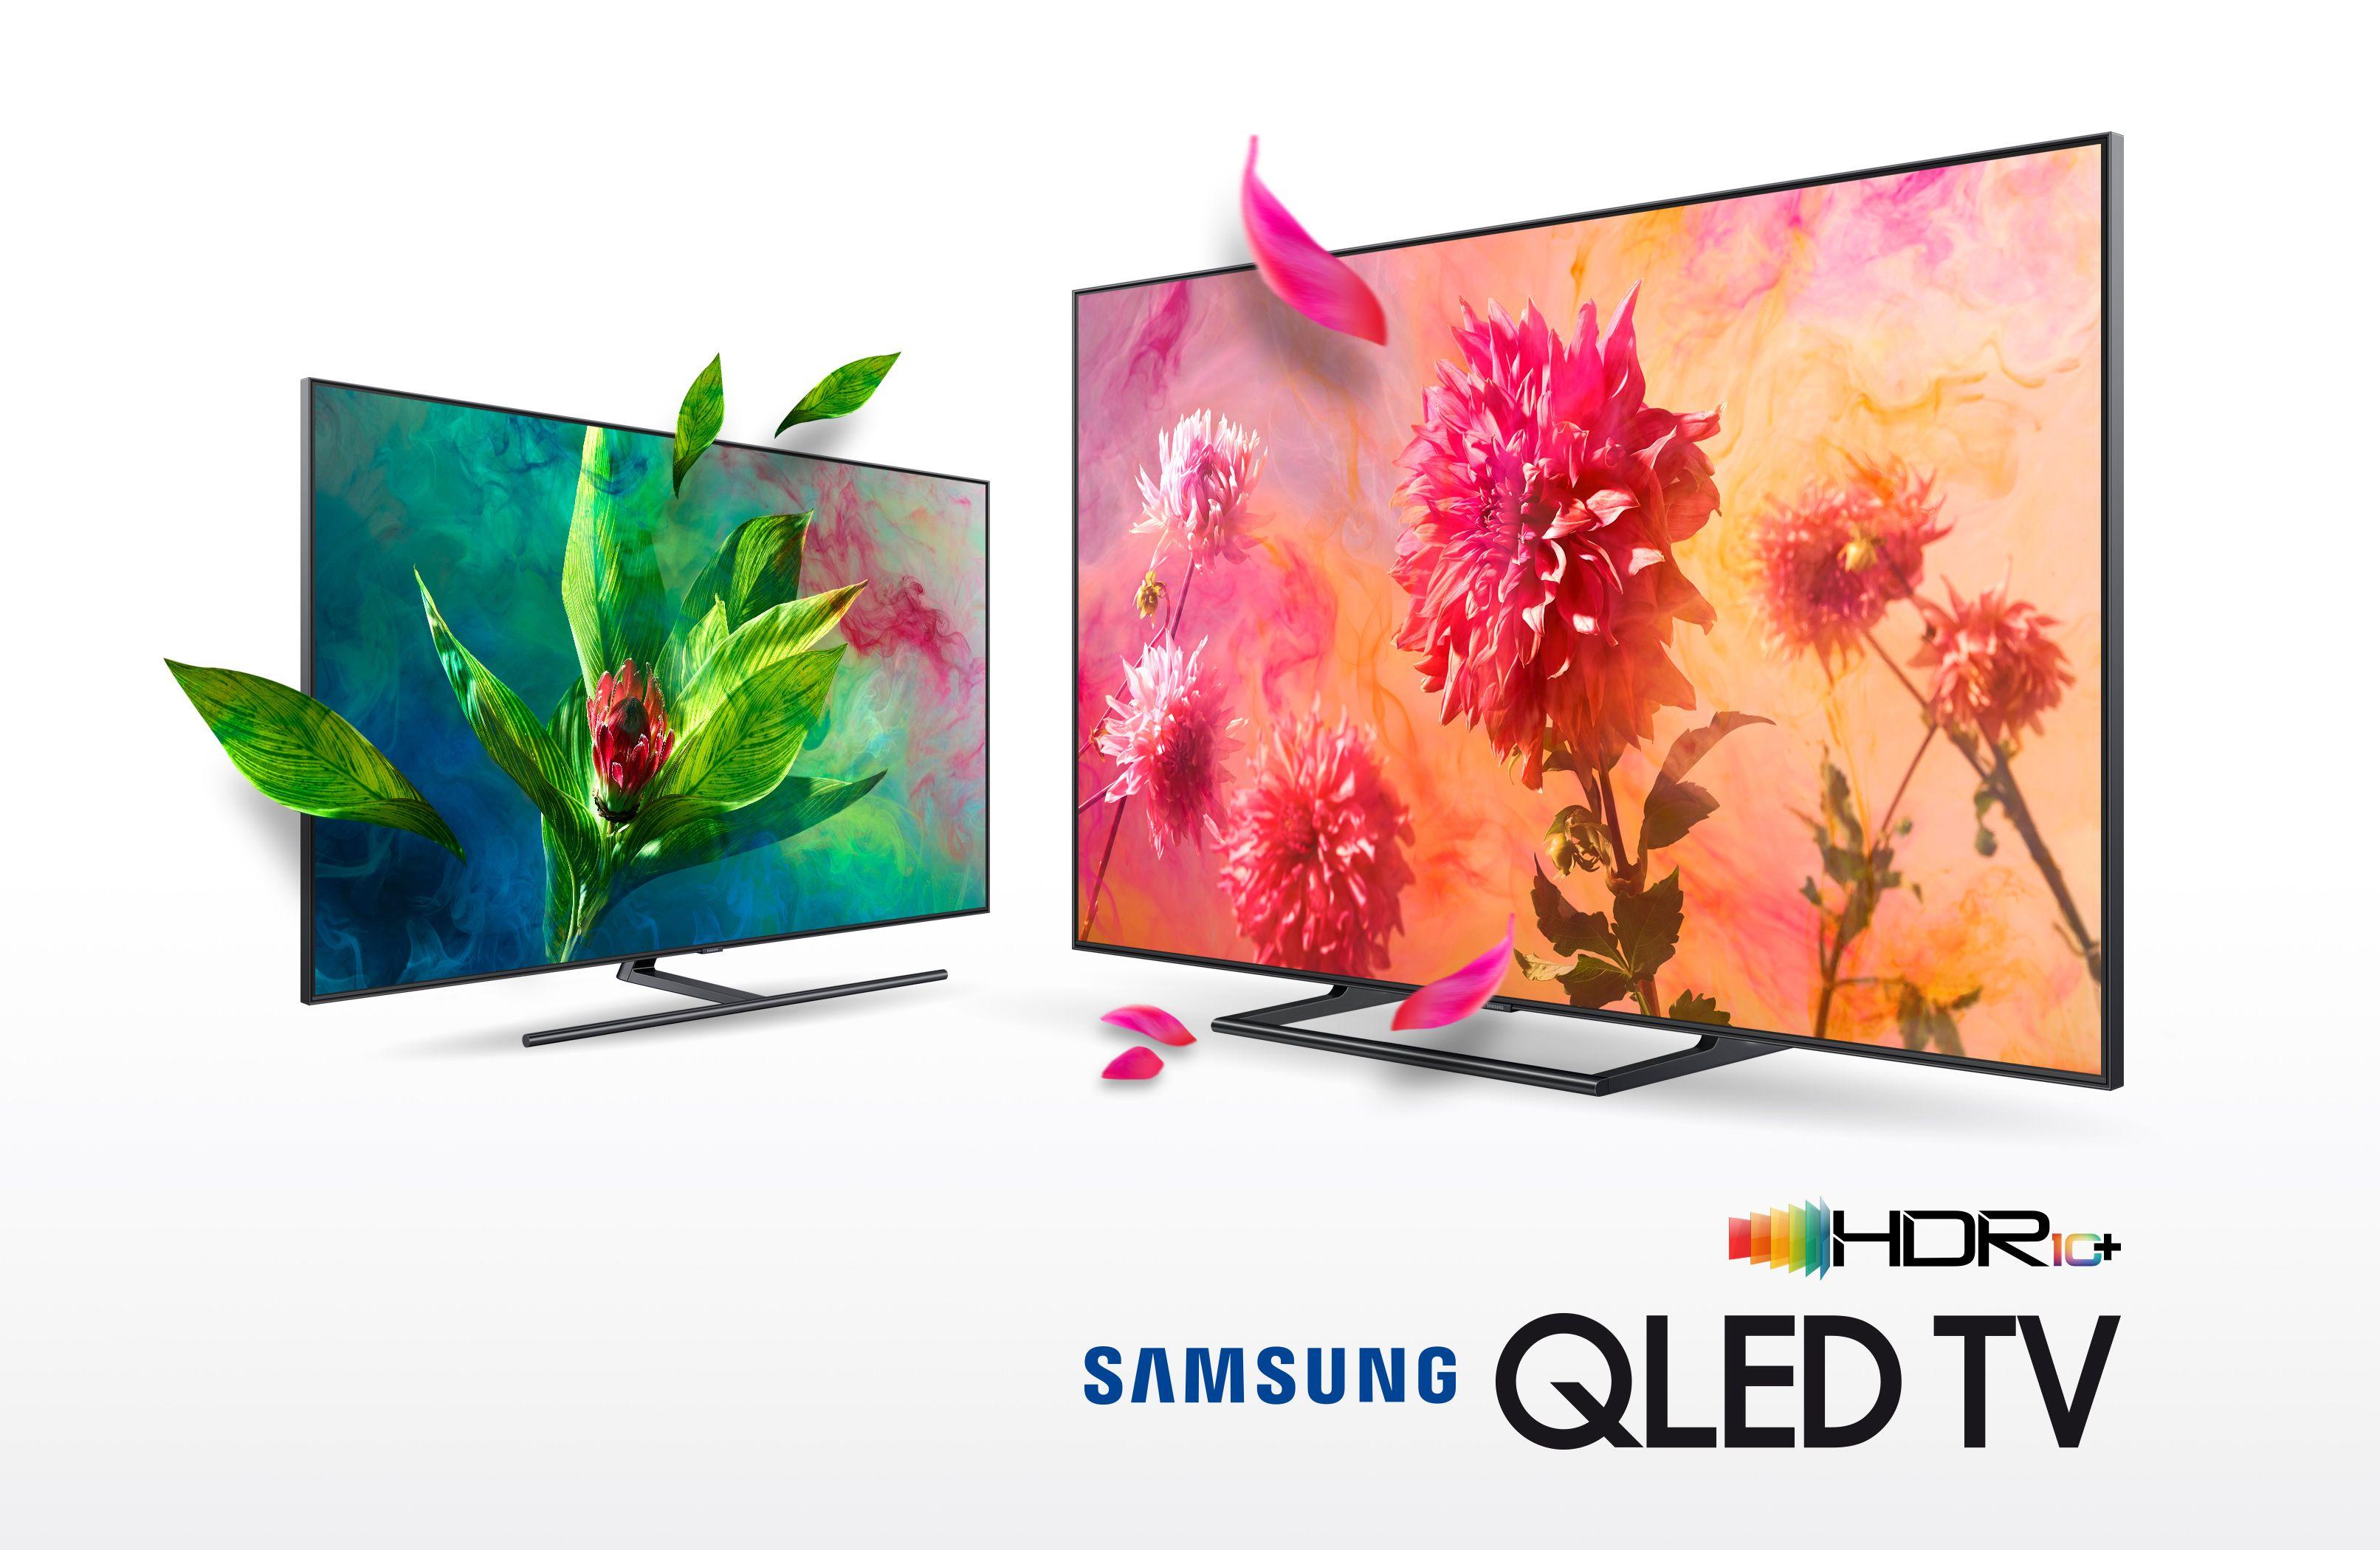 Samsung 2018 Logo - Samsung's 2018 Premium UHD and QLED TVs Receive 'HDR